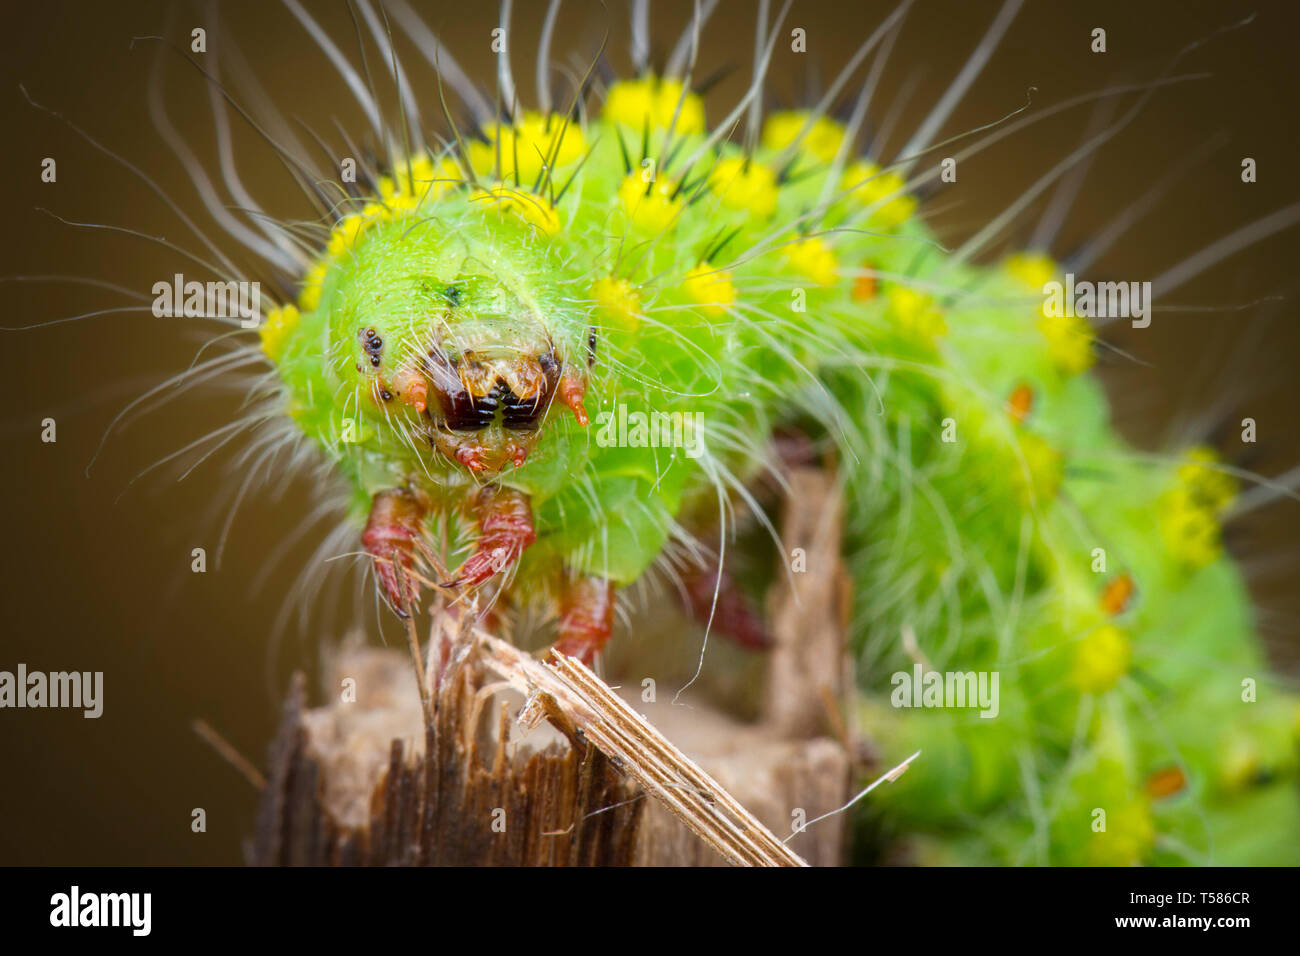 Saturnia pavonia green monster macrophotography larva state Stock Photo